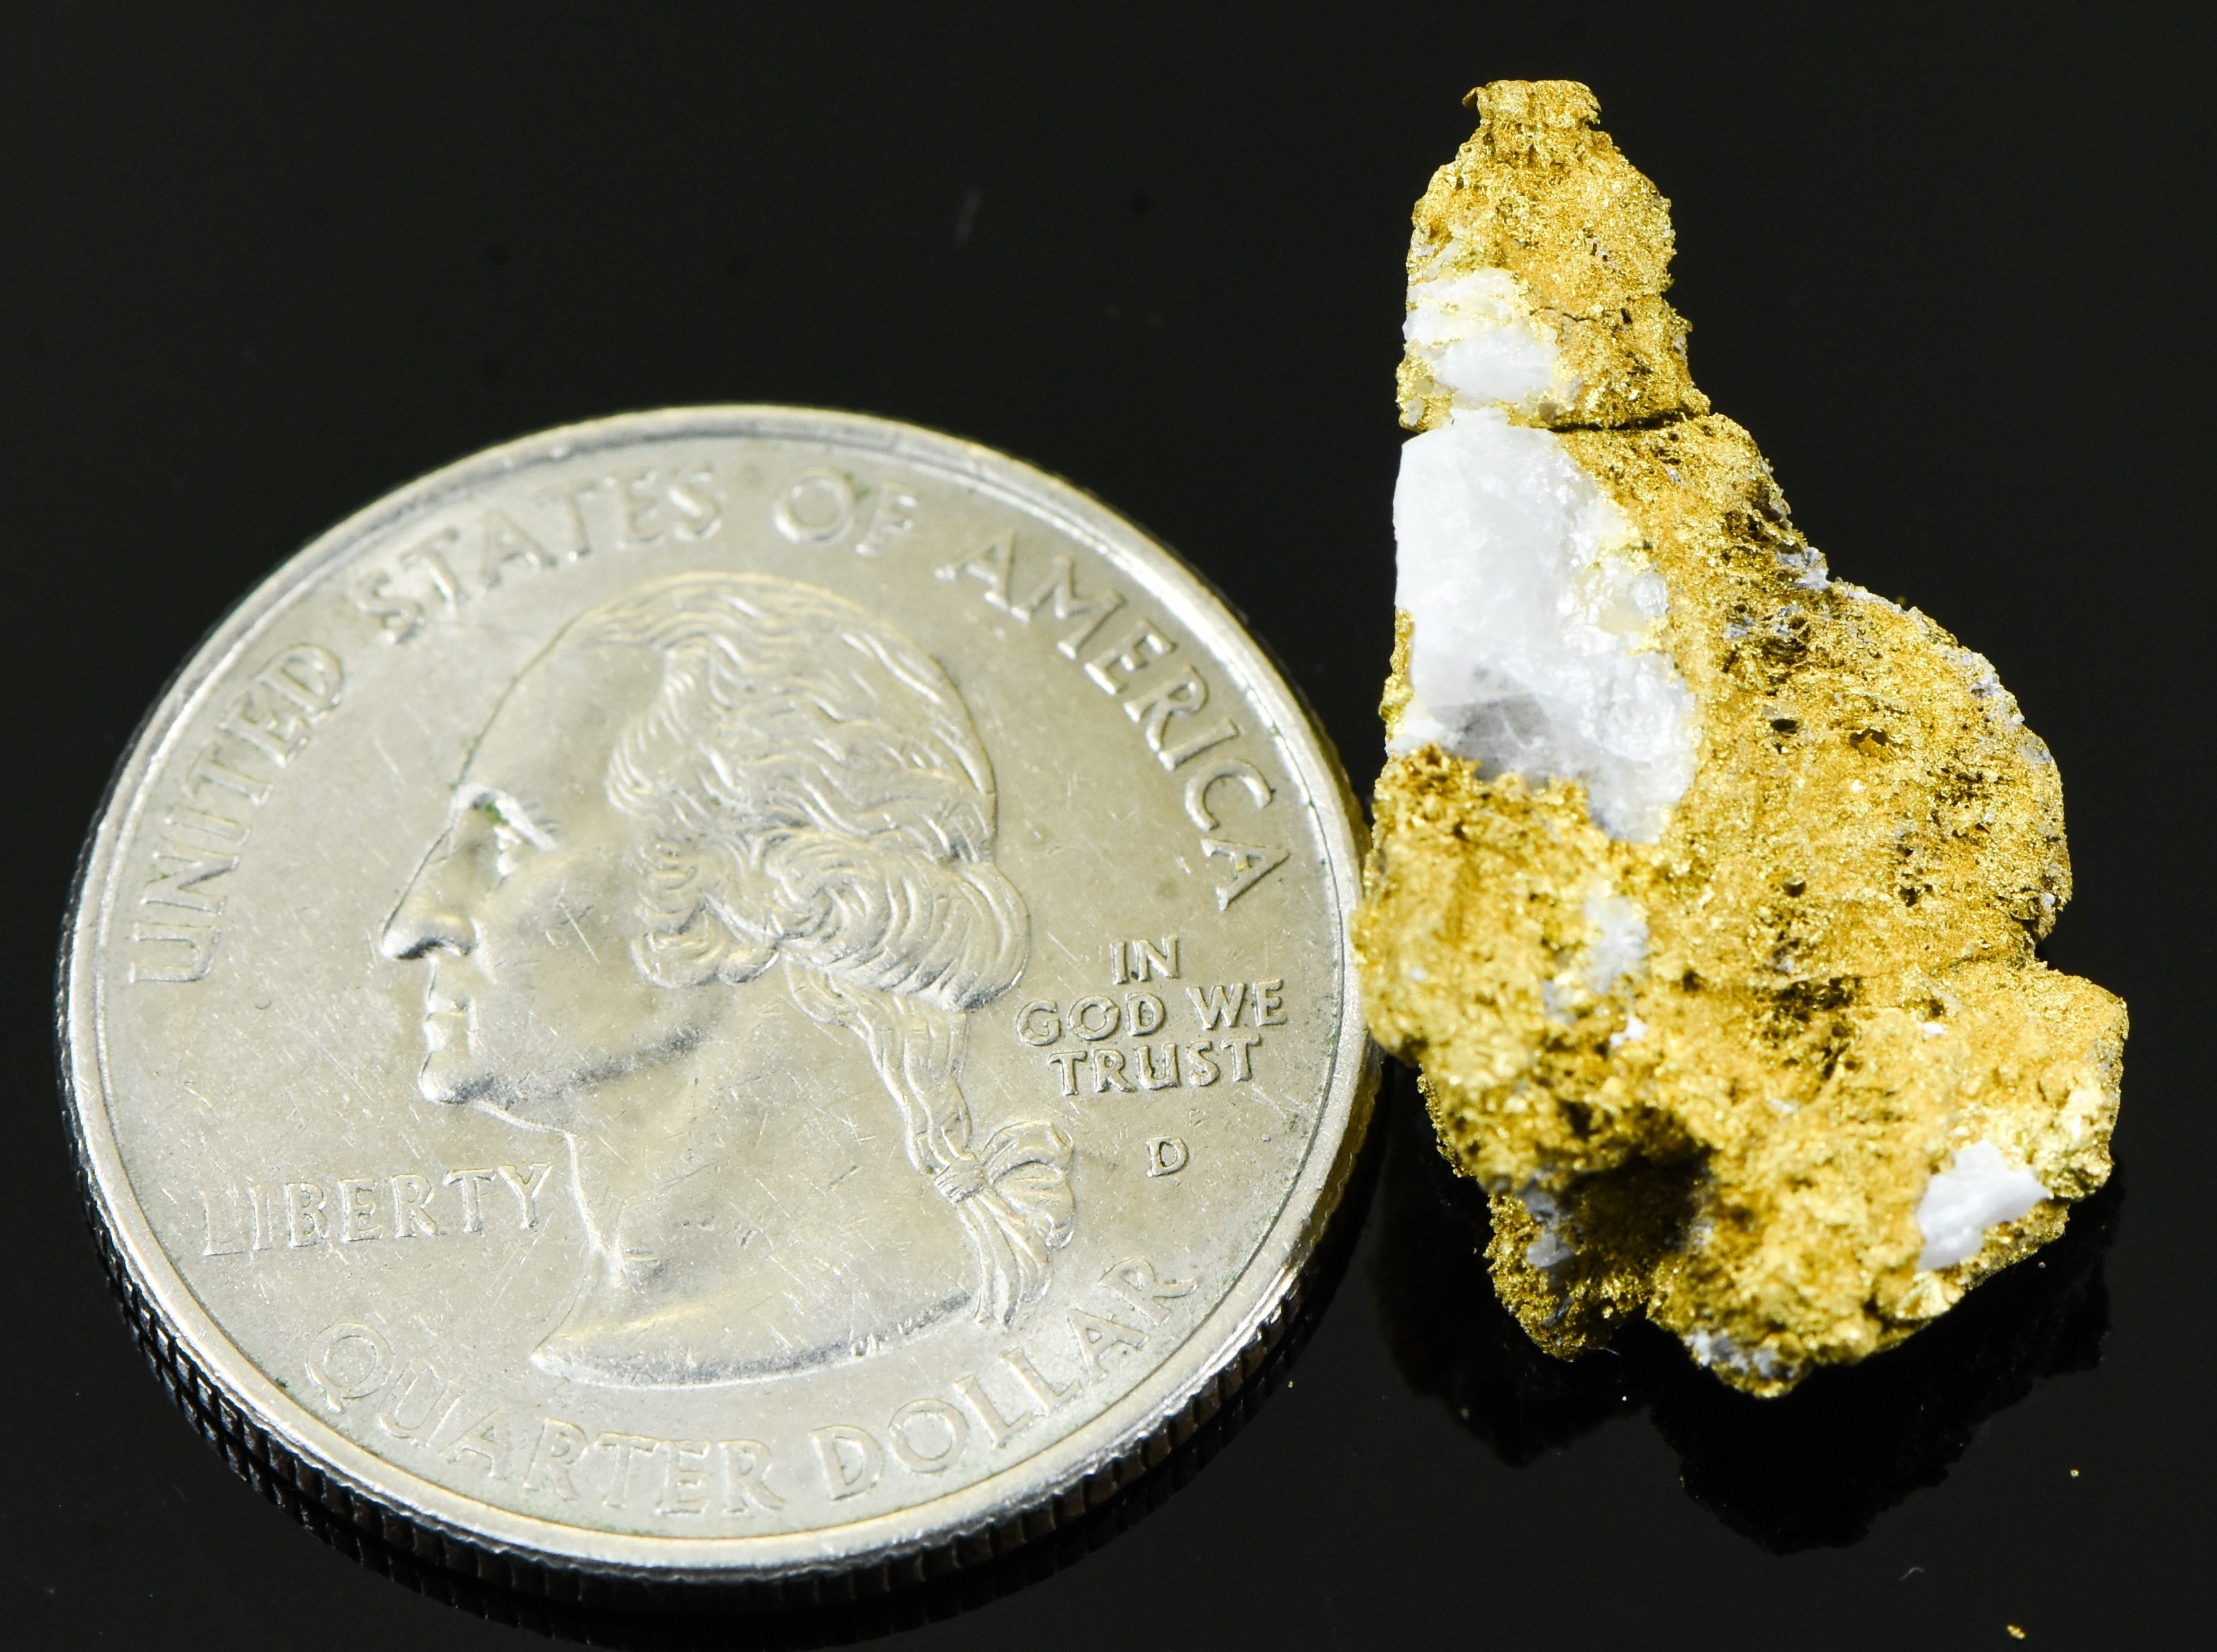 #OM-63 Crystalline Gold Nugget Specimen 6.64 Grams Oriental Mine Sierra County California Rare